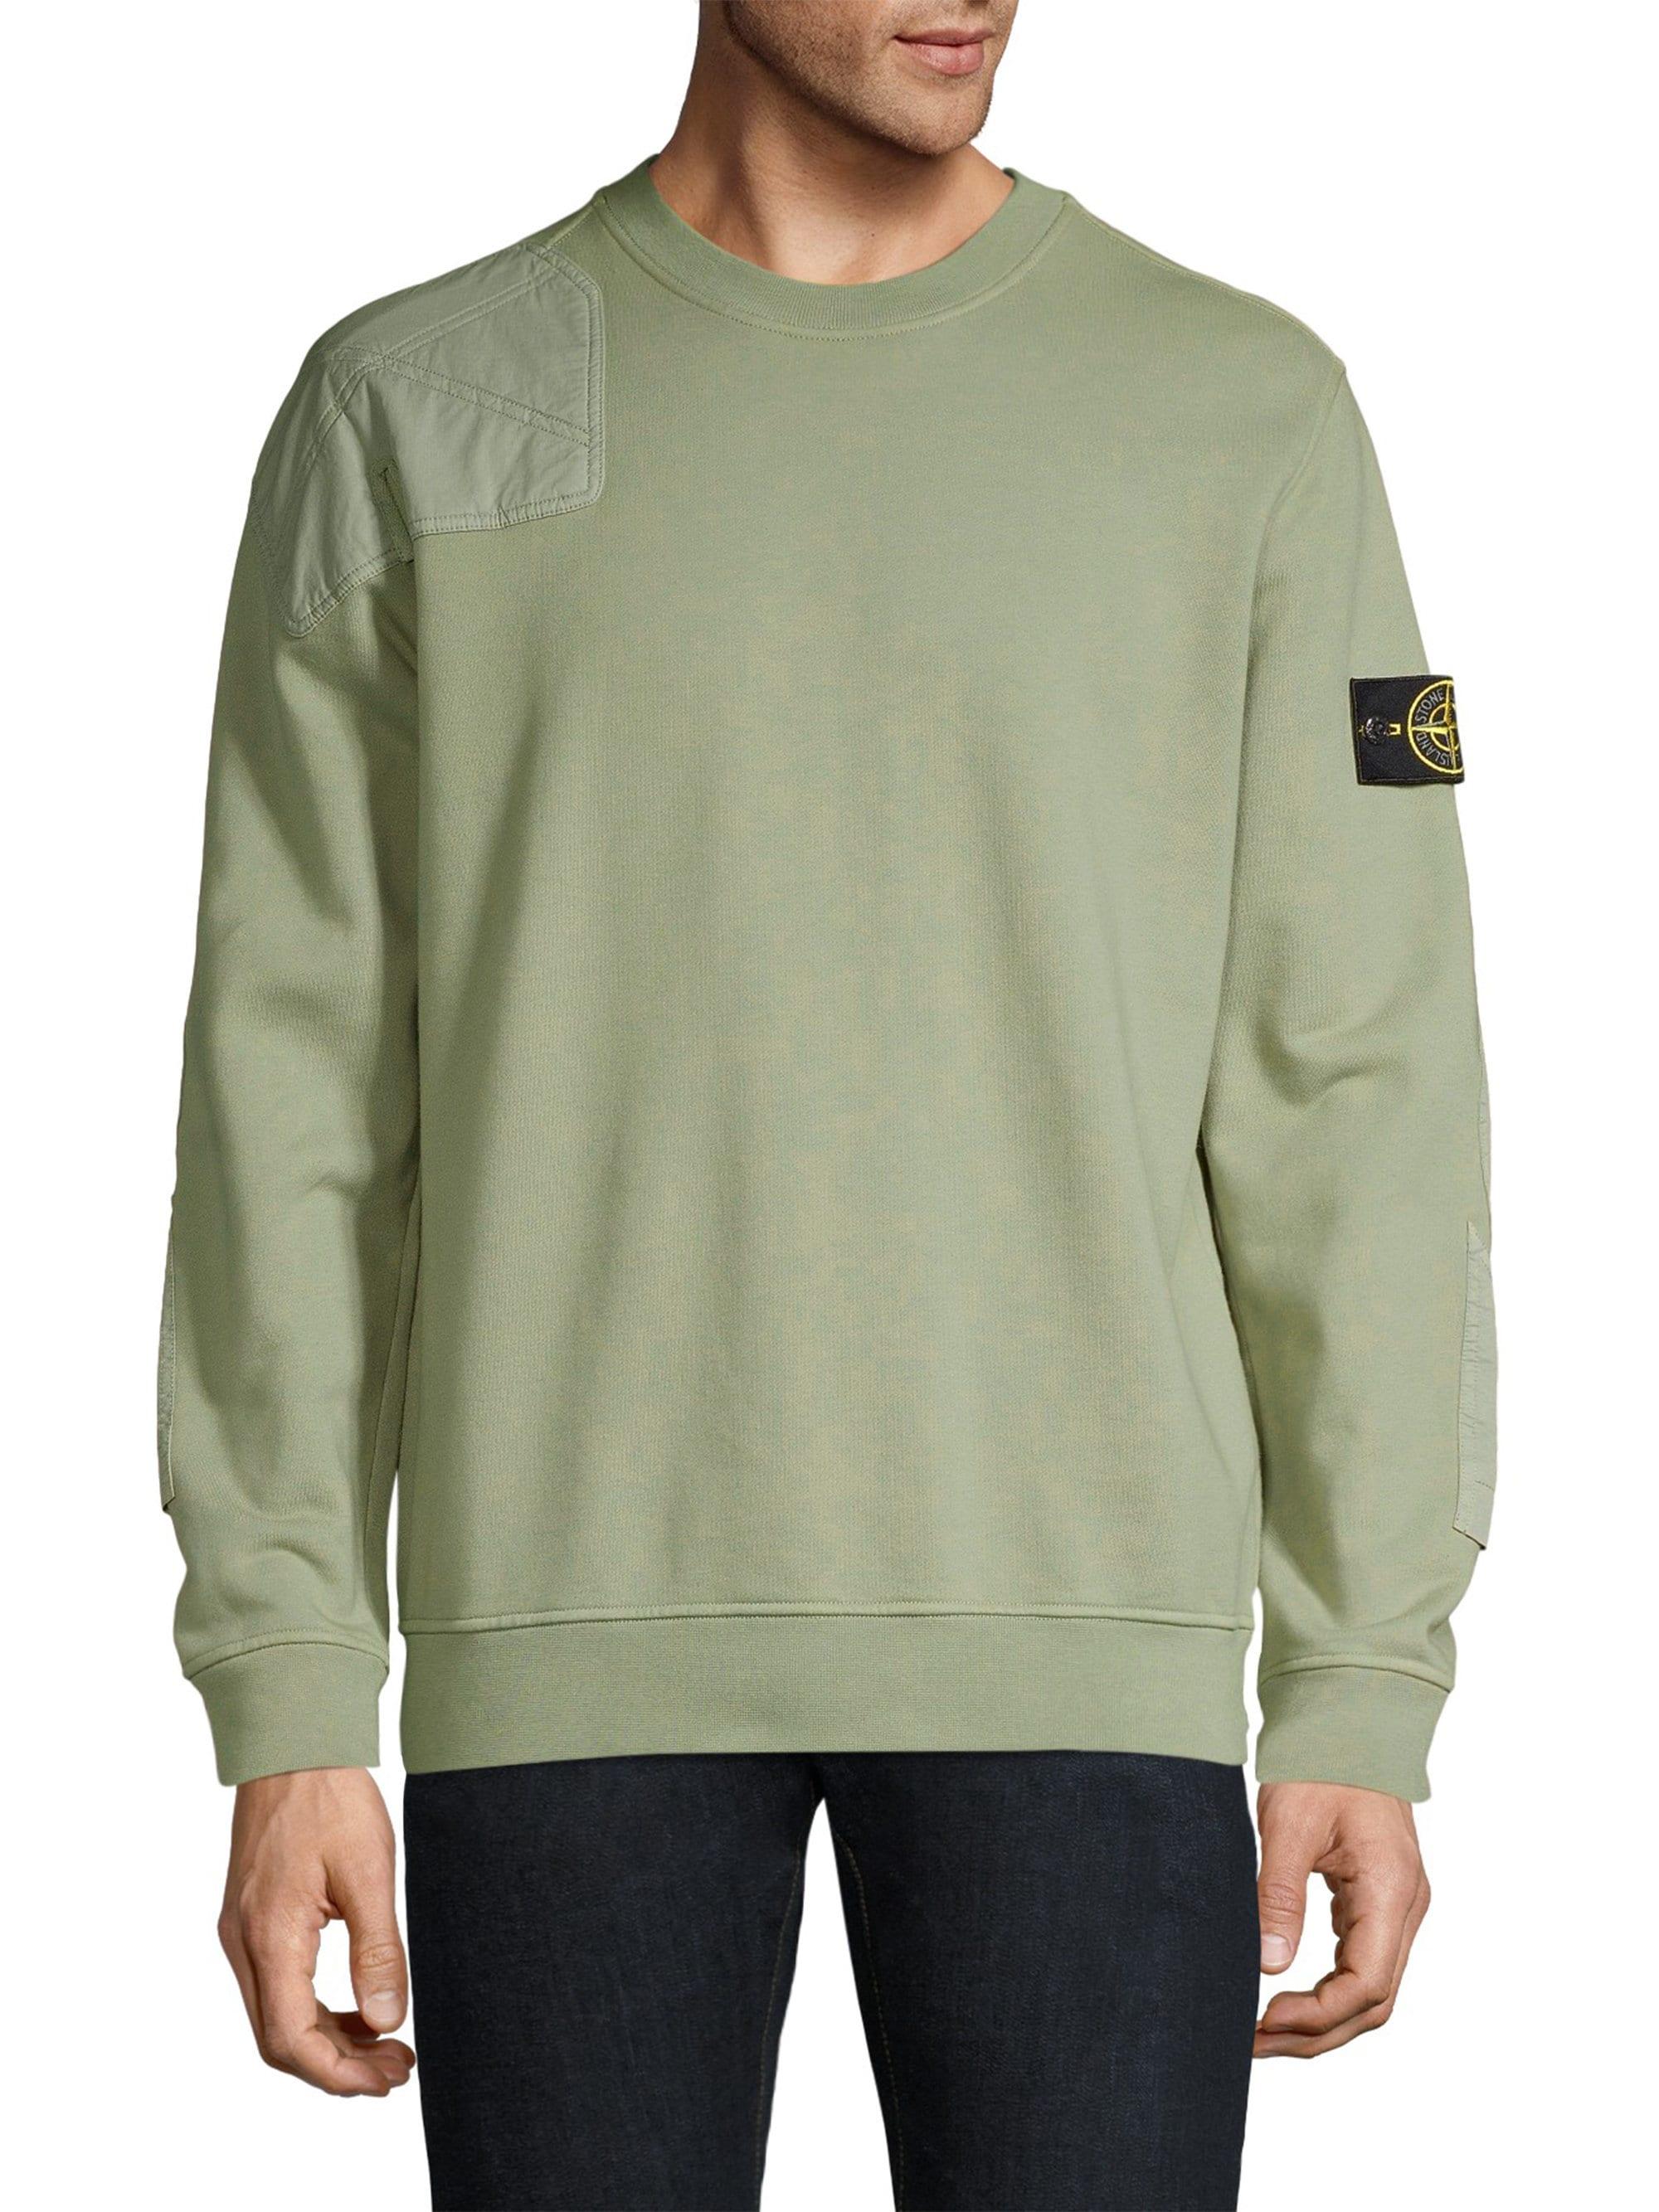 Stone Island Melange Fleece Sweatshirt in Sage (Green) for Men - Lyst